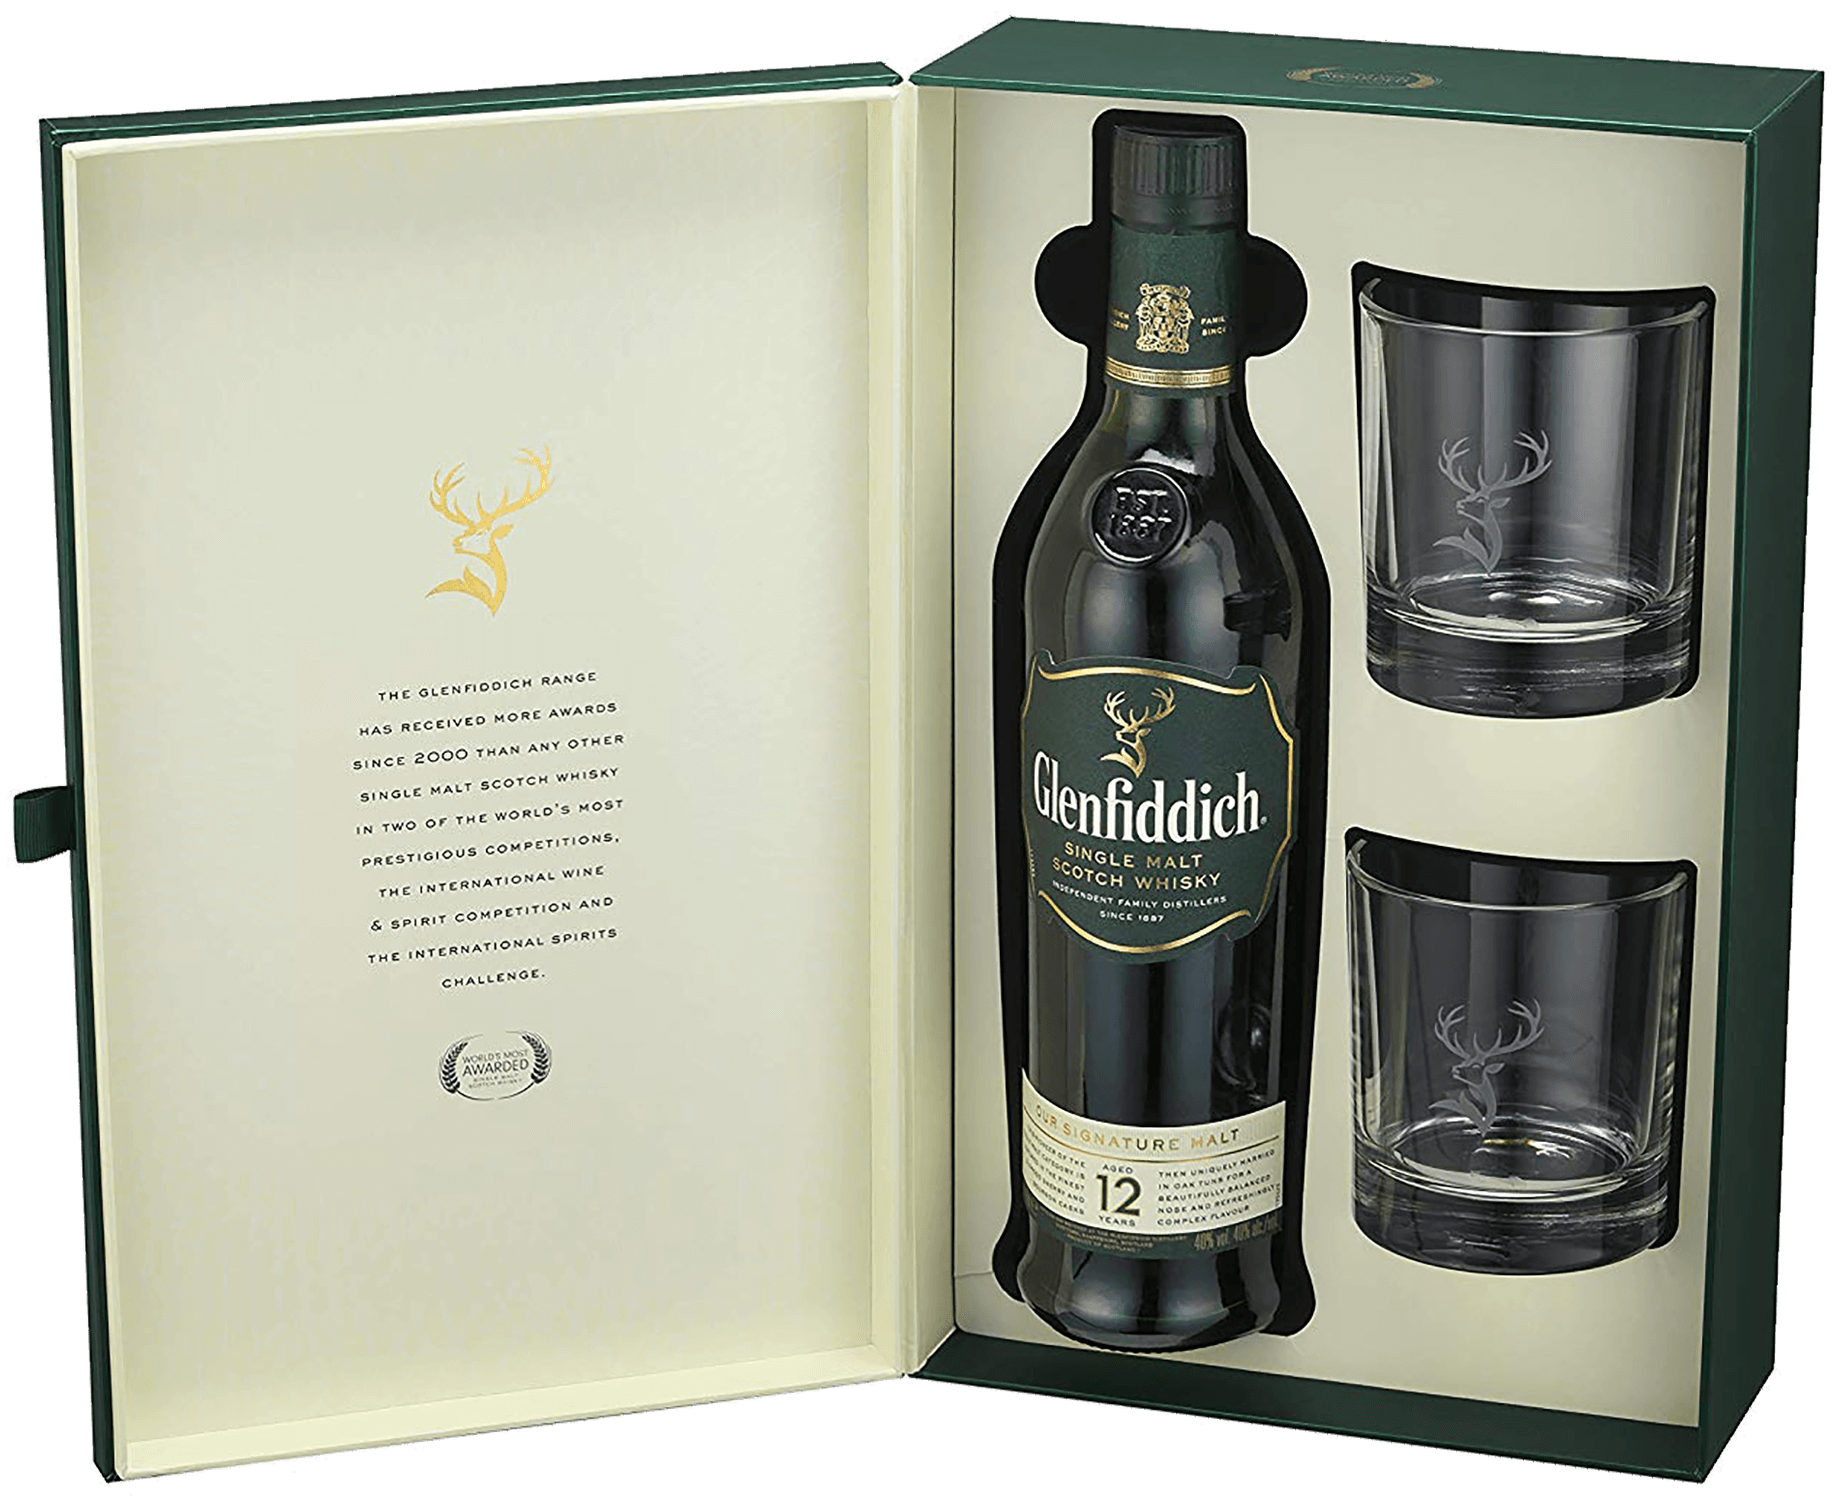 Glenfiddich 12 y.o. Single Malt Scotch Whisky (gift box with 2 glasses)